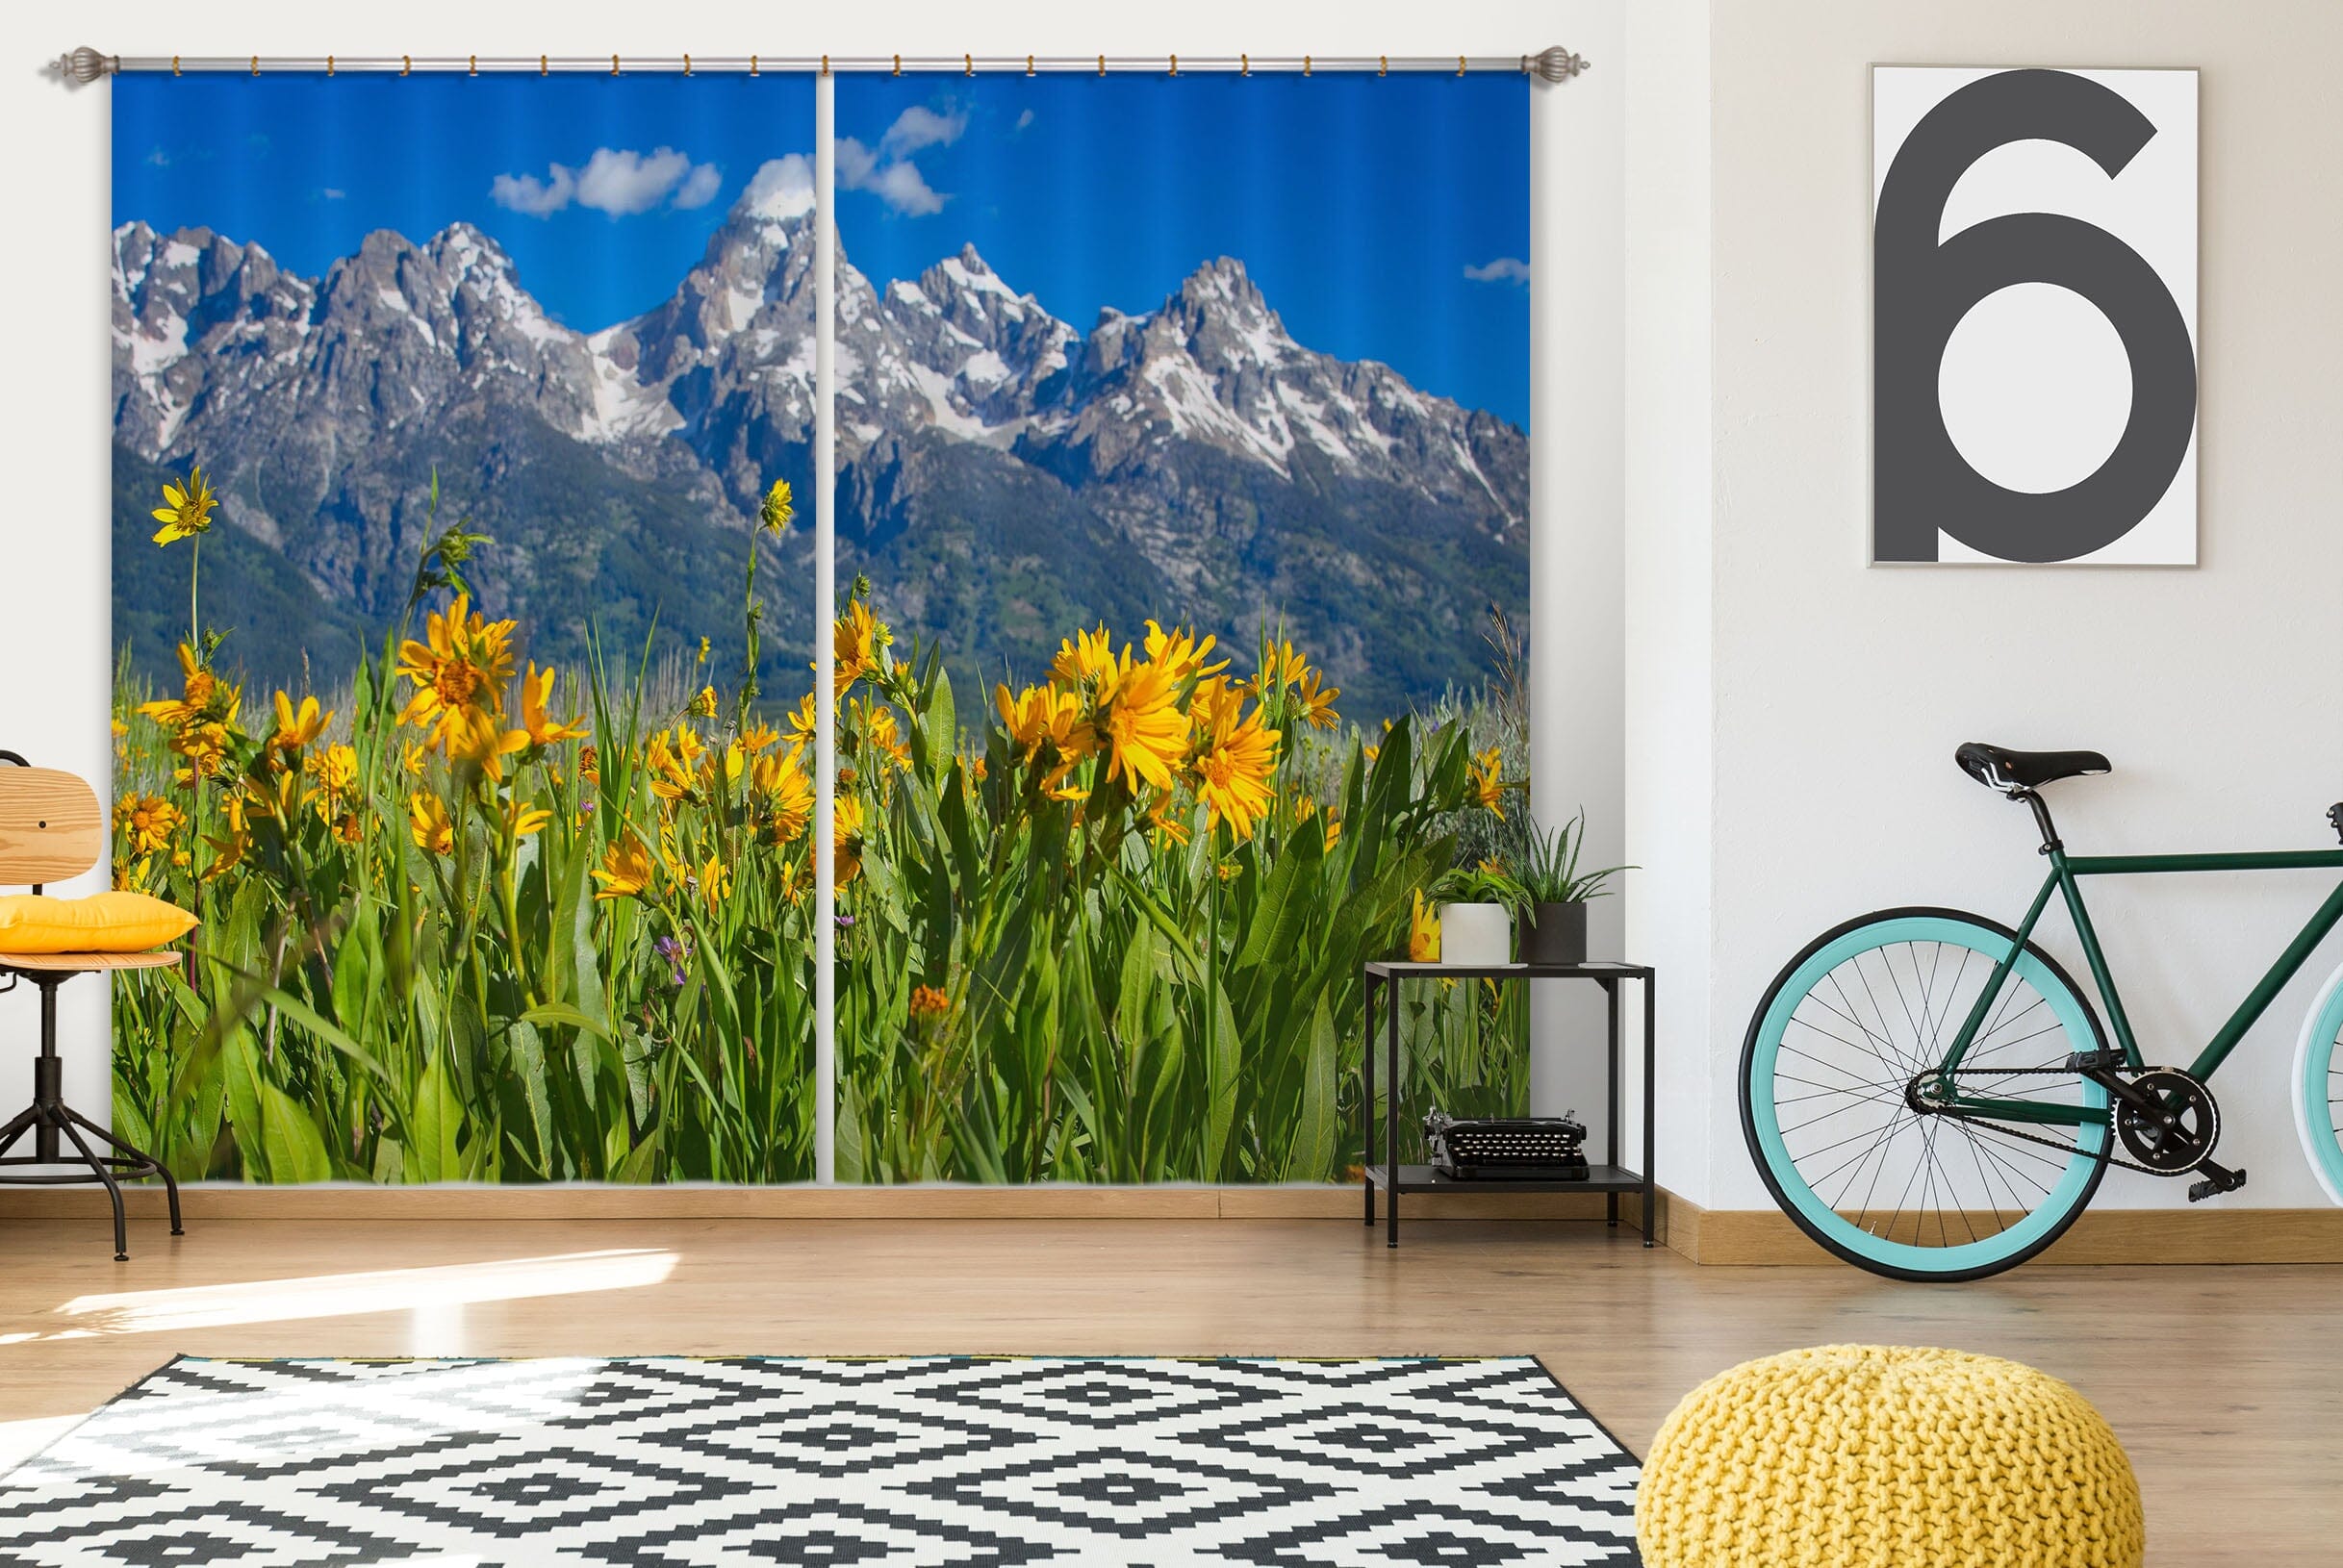 3D Mountain Wildflowers 062 Kathy Barefield Curtain Curtains Drapes Curtains AJ Creativity Home 